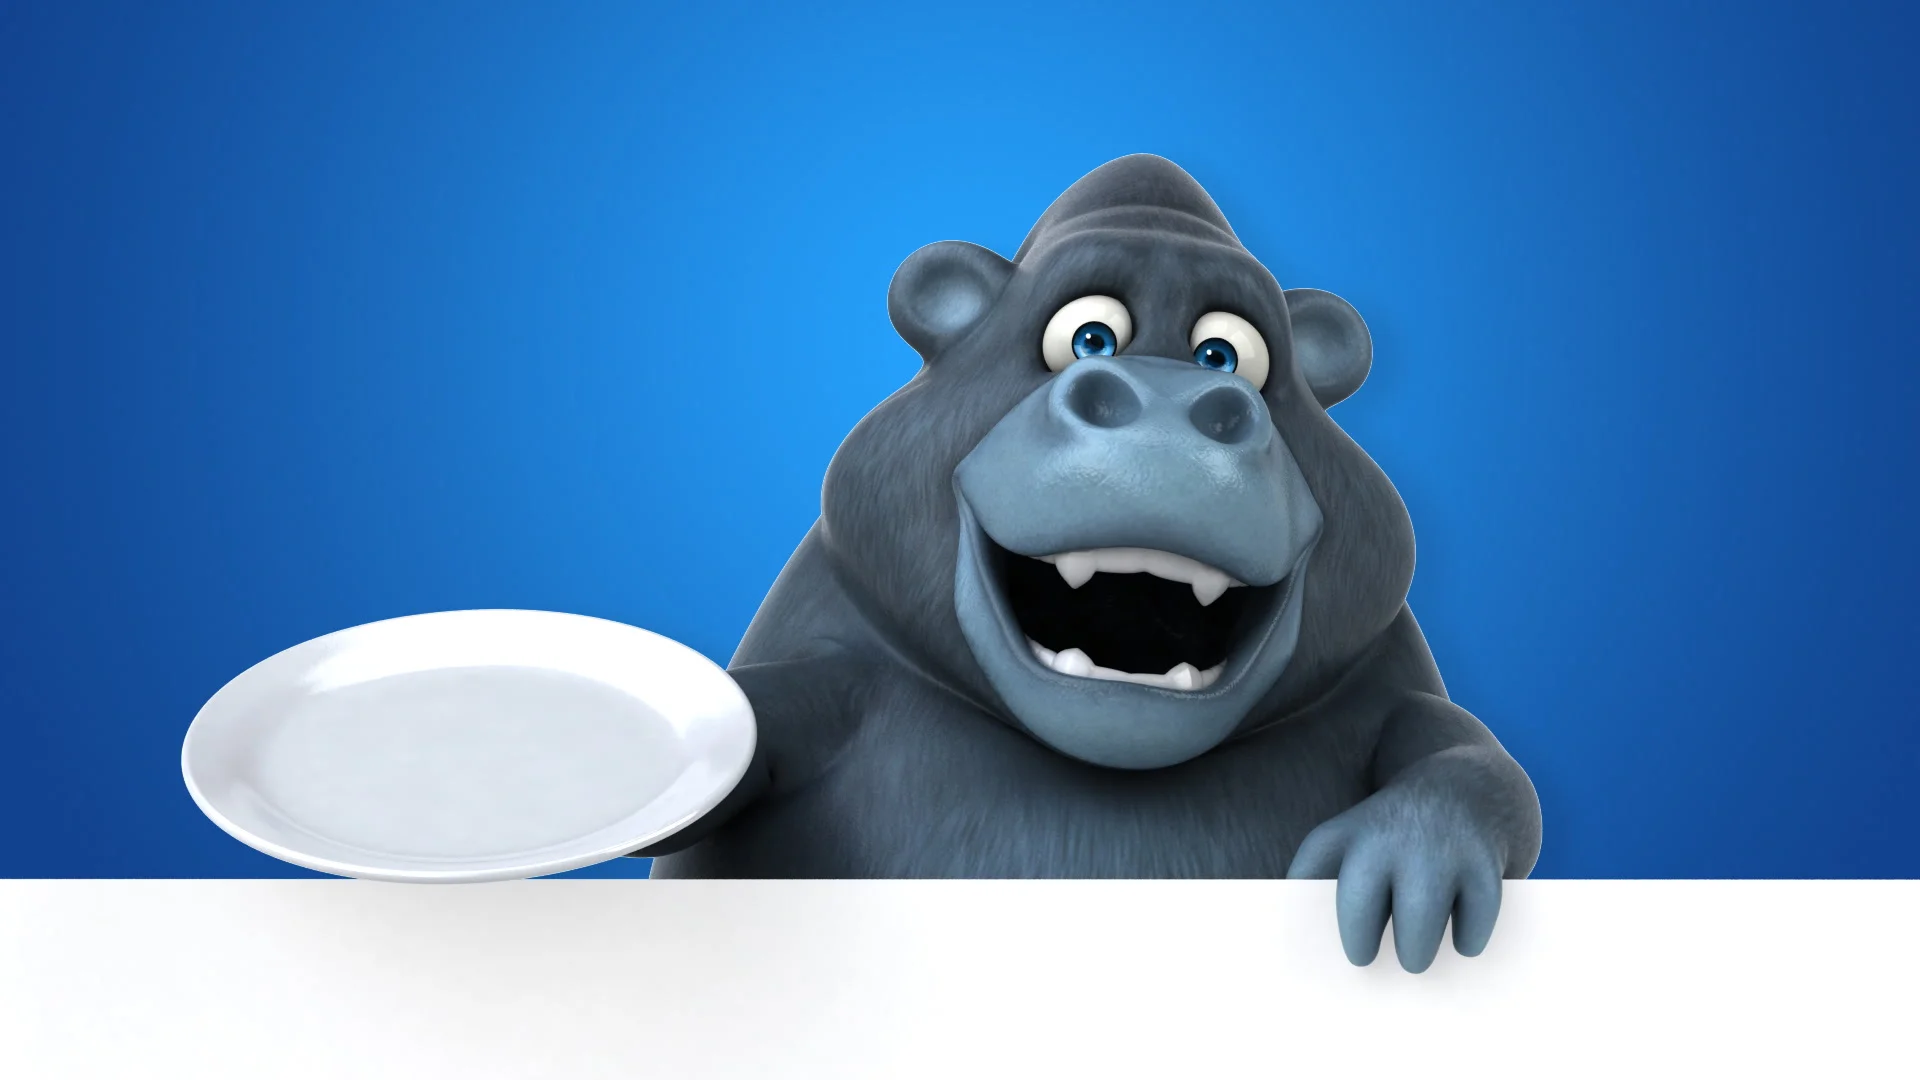 Fun gorilla - 3D Animation | Stock Video | Pond5